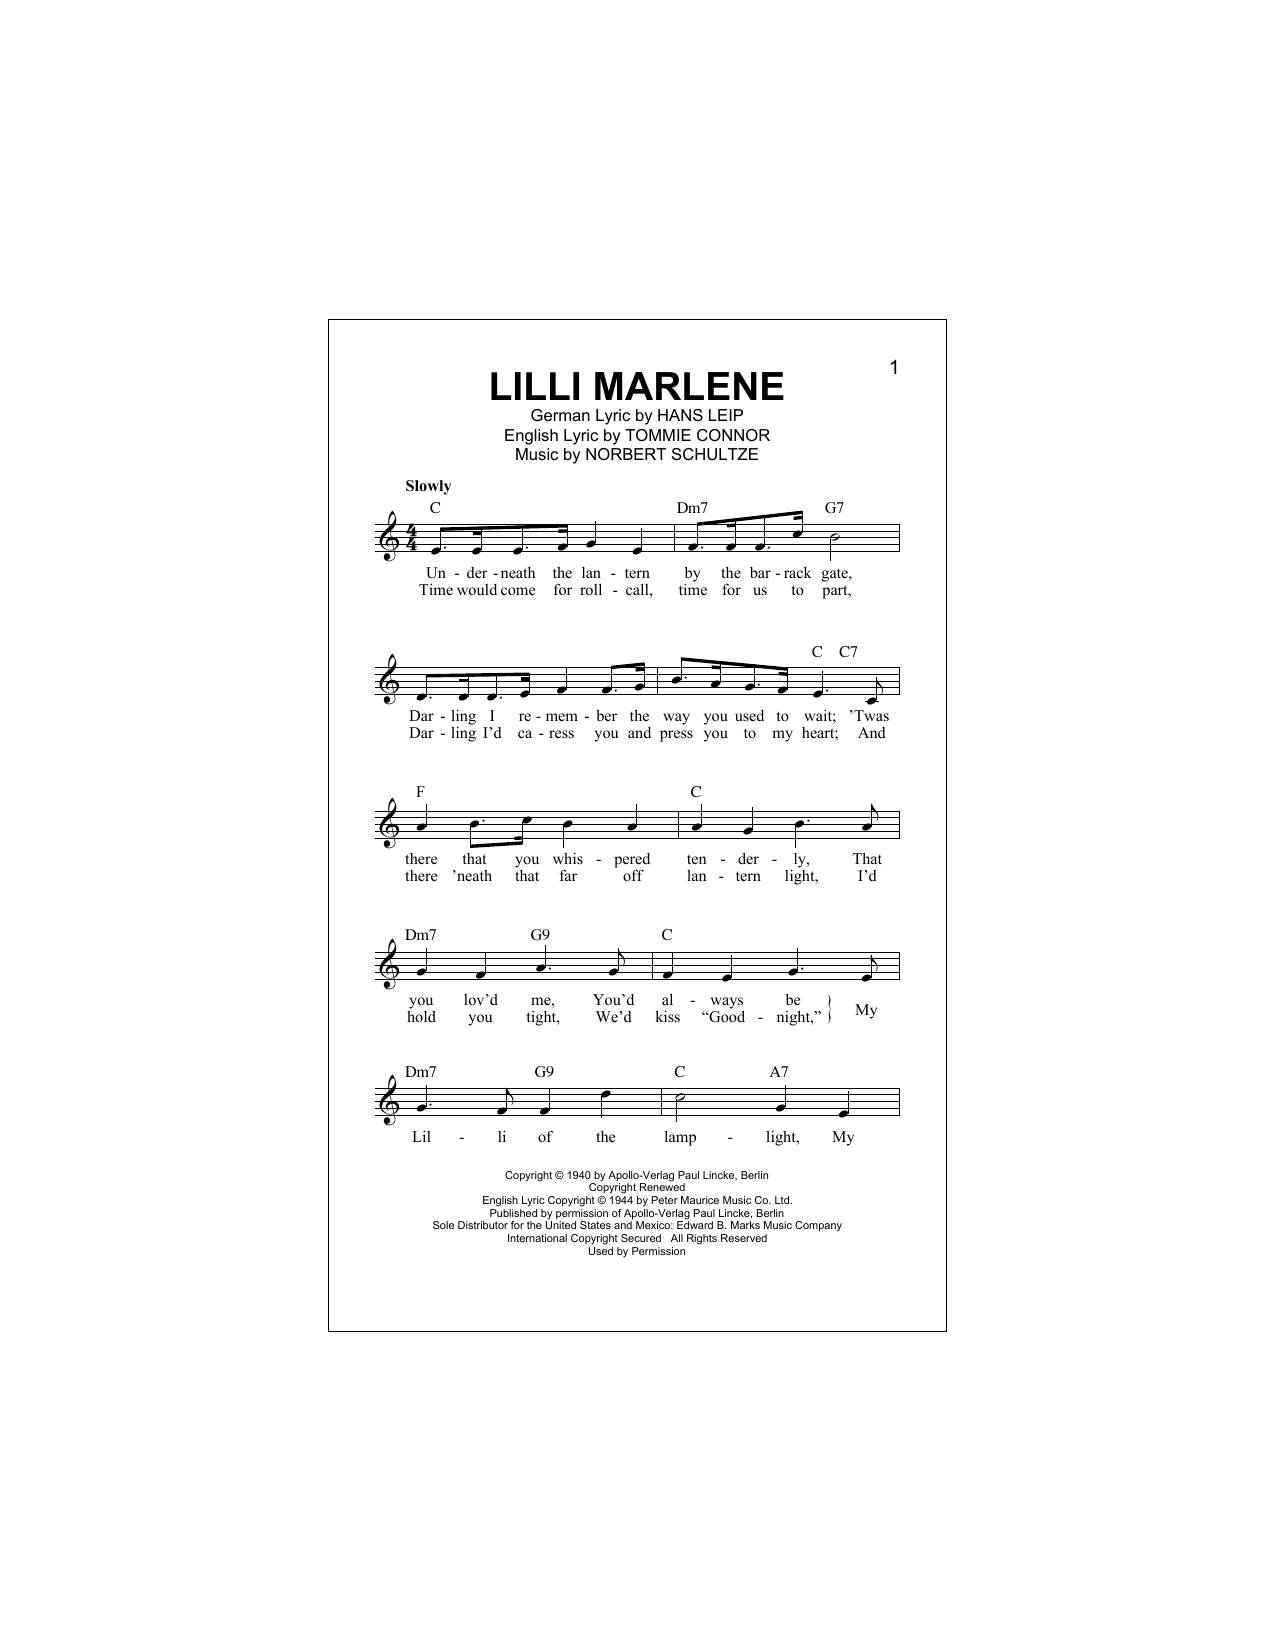 Marlene Dietrich Lilli Marlene (Lili Marleen) Sheet Music Notes & Chords for Melody Line, Lyrics & Chords - Download or Print PDF